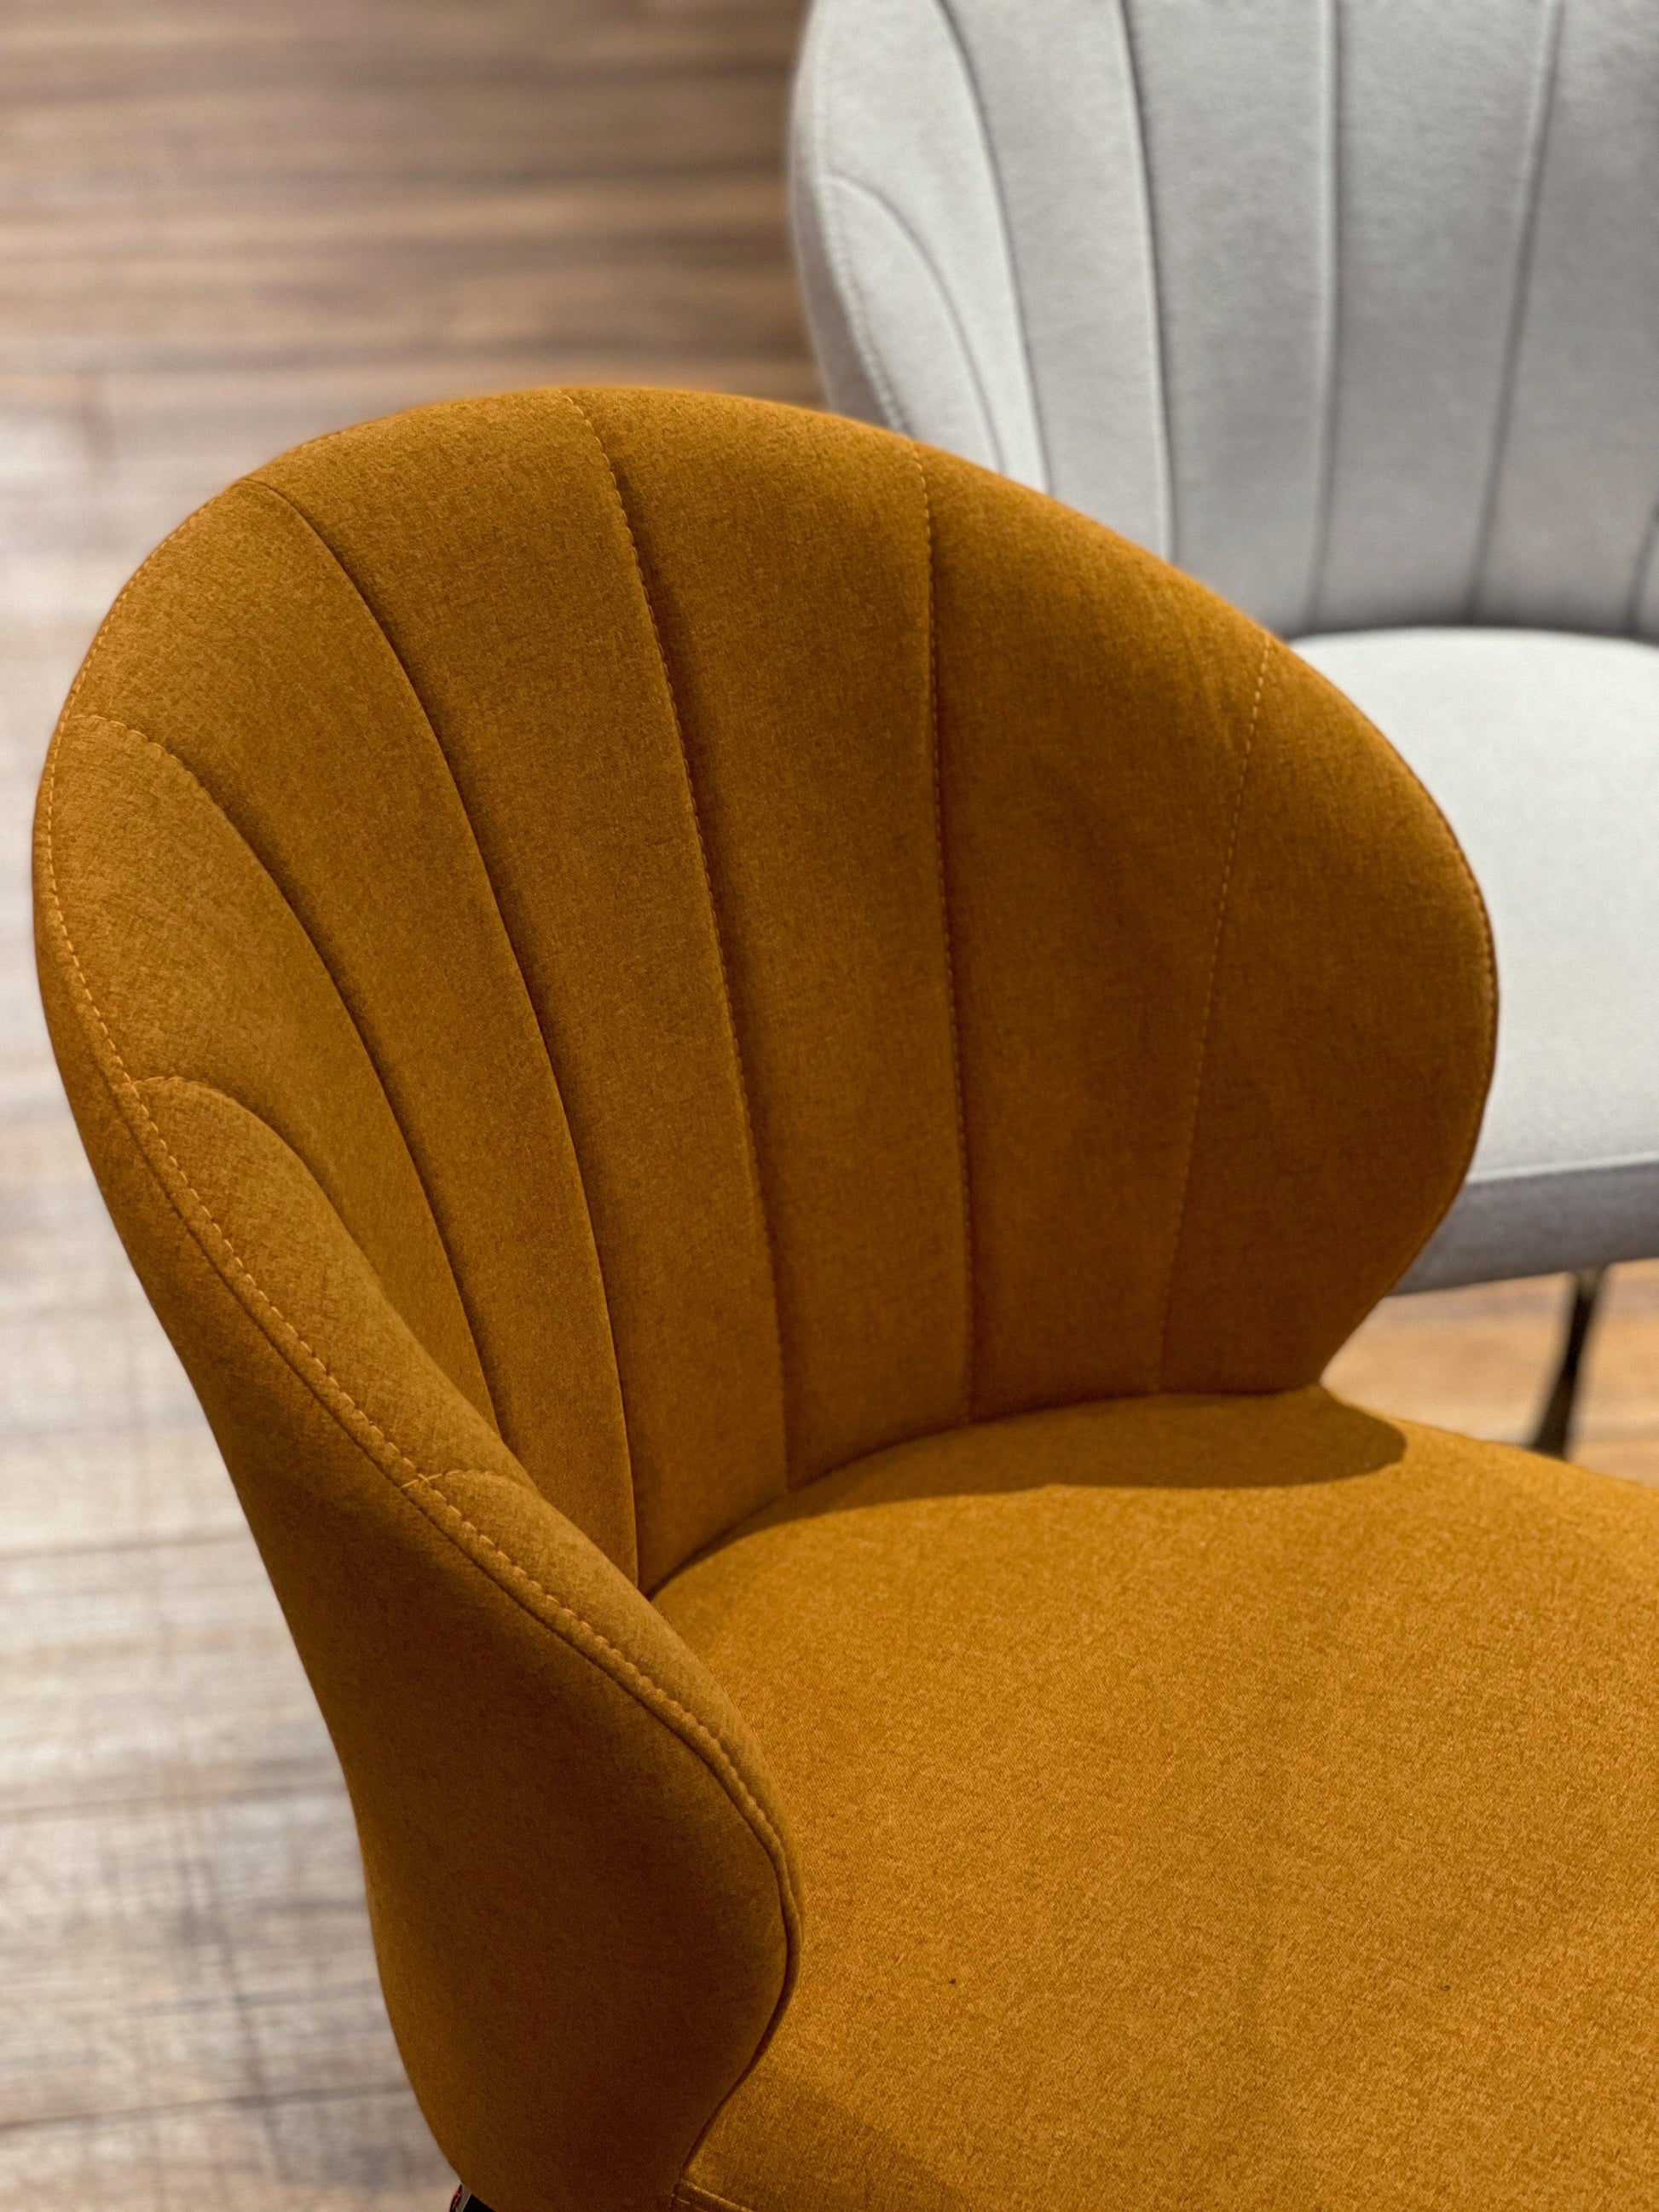 Meridian Dining Chair in Orange Fabric - HomesToLife